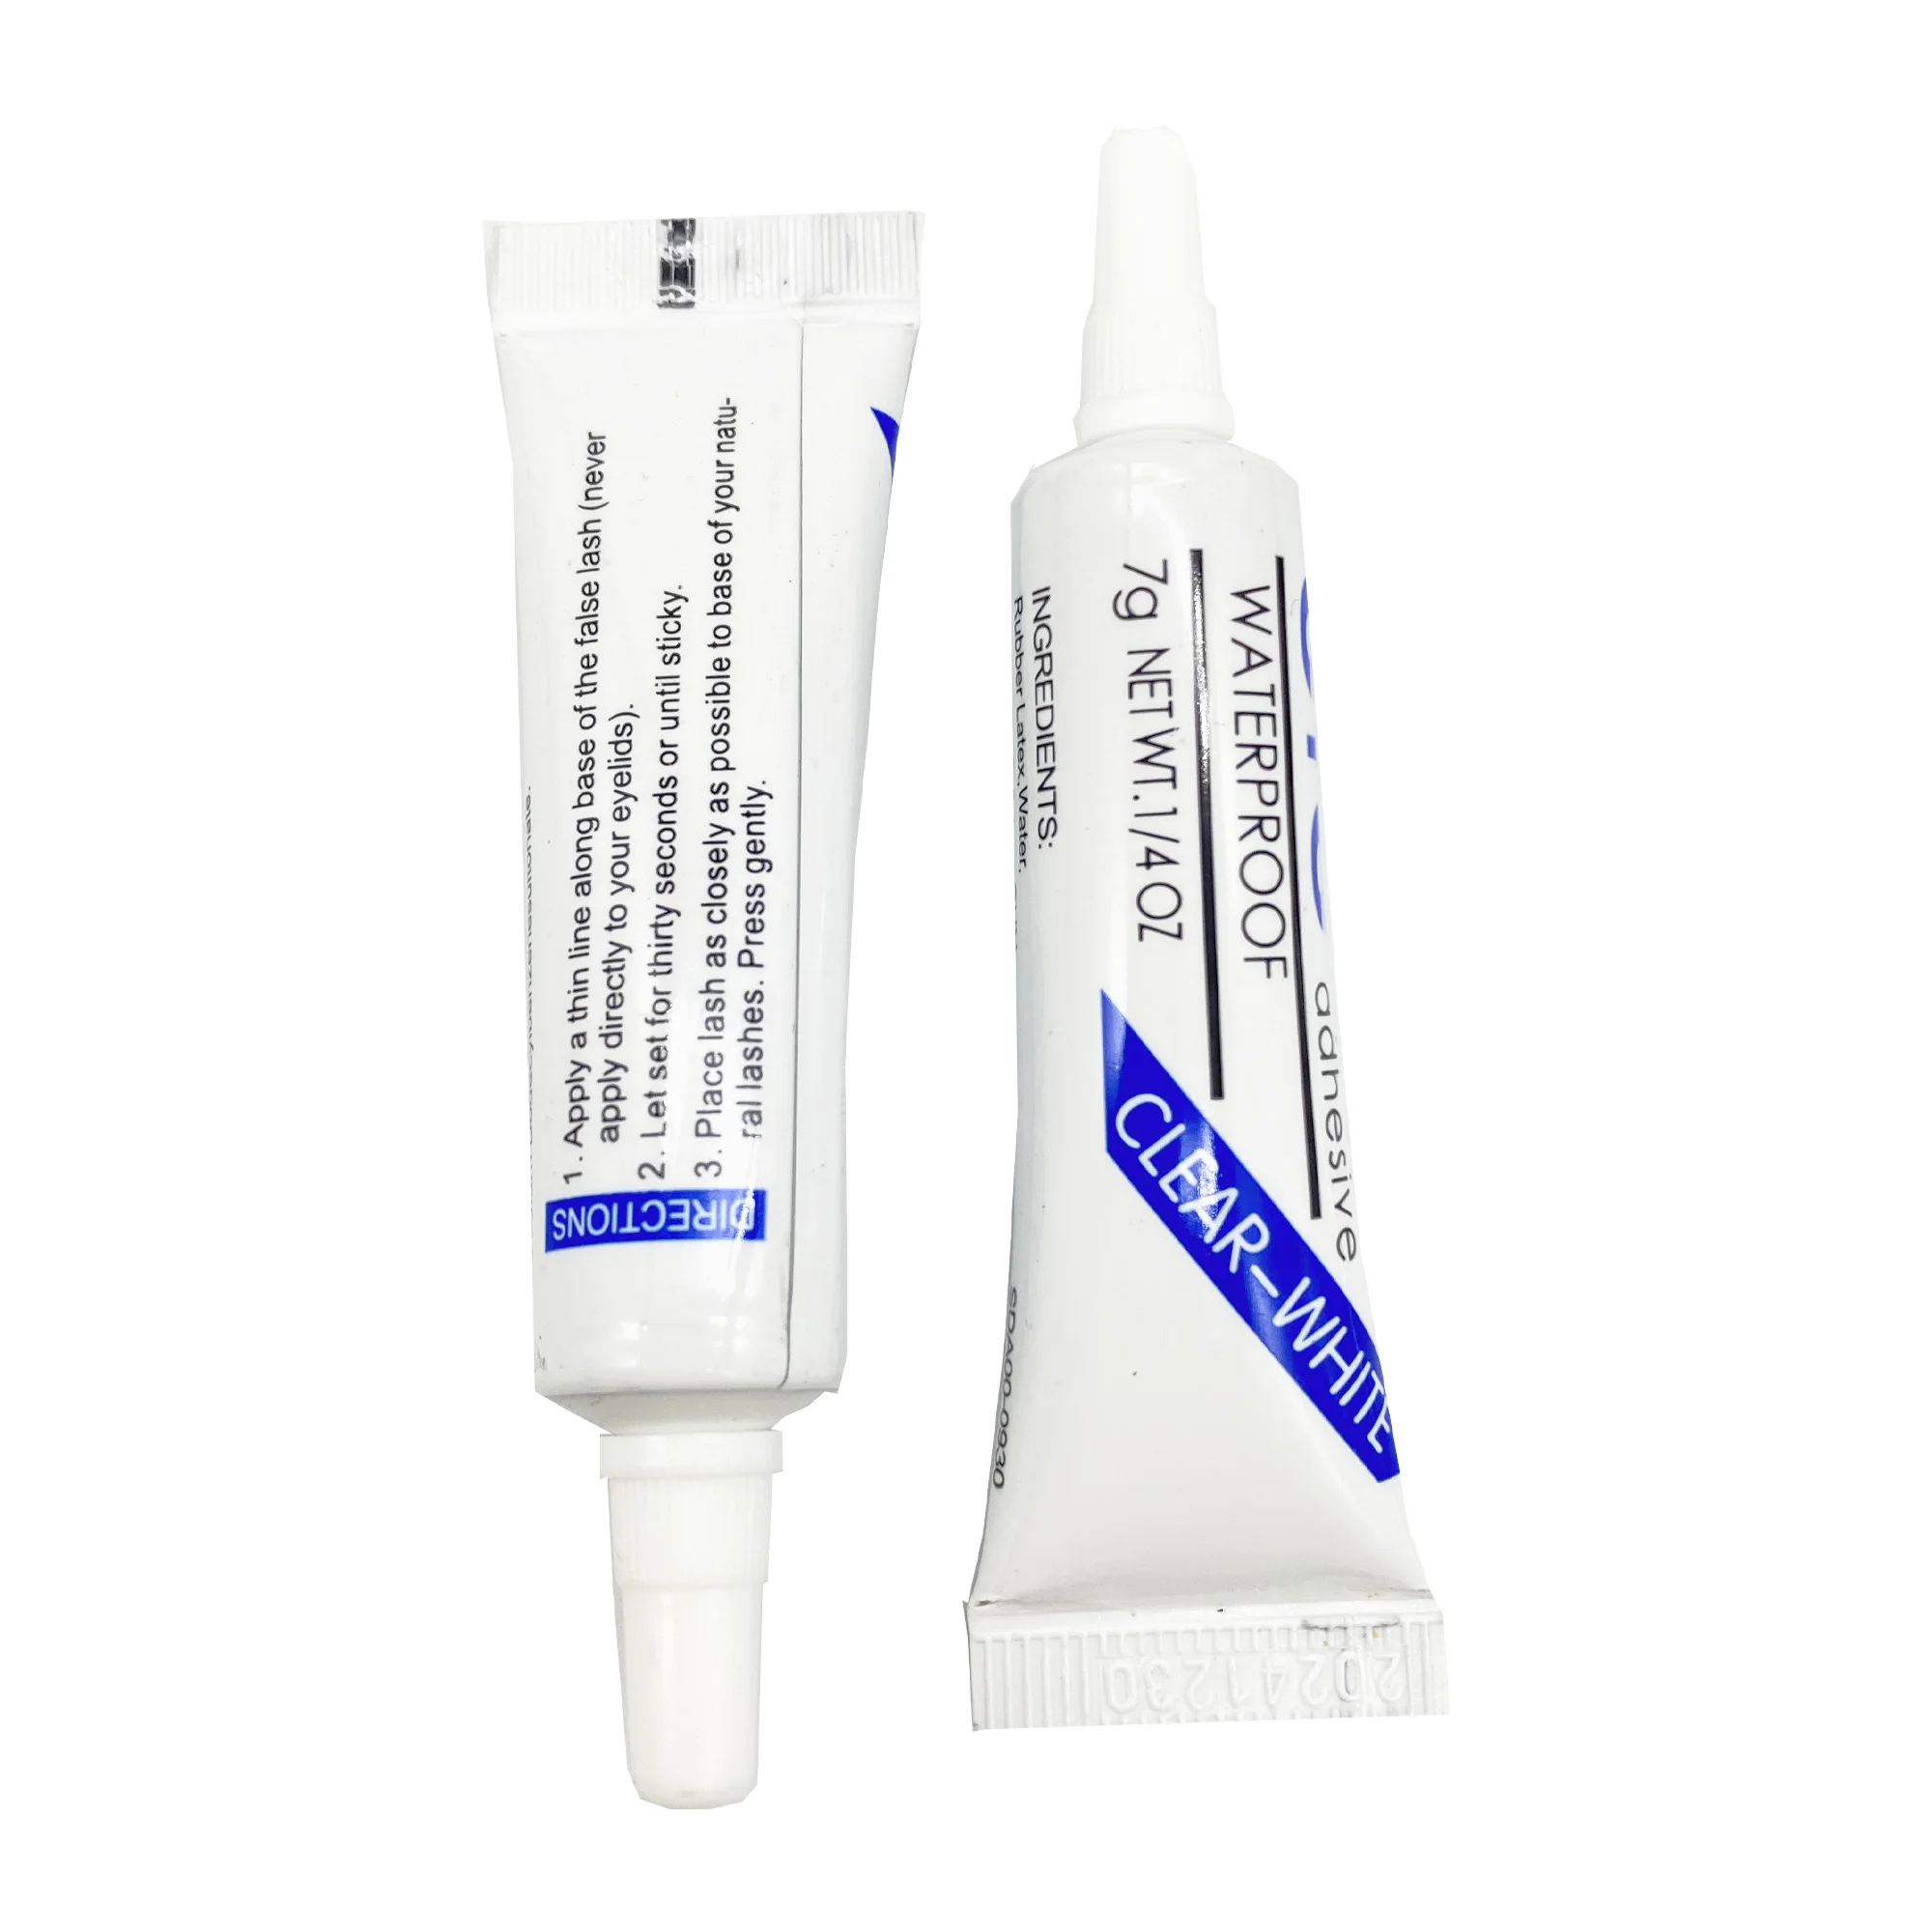 

Eyelash Glue Professional Glues for Eyelashes Makeup Tools Eyelash Glue Adhesive Lash Glue Lashes Accessories Faux Cils